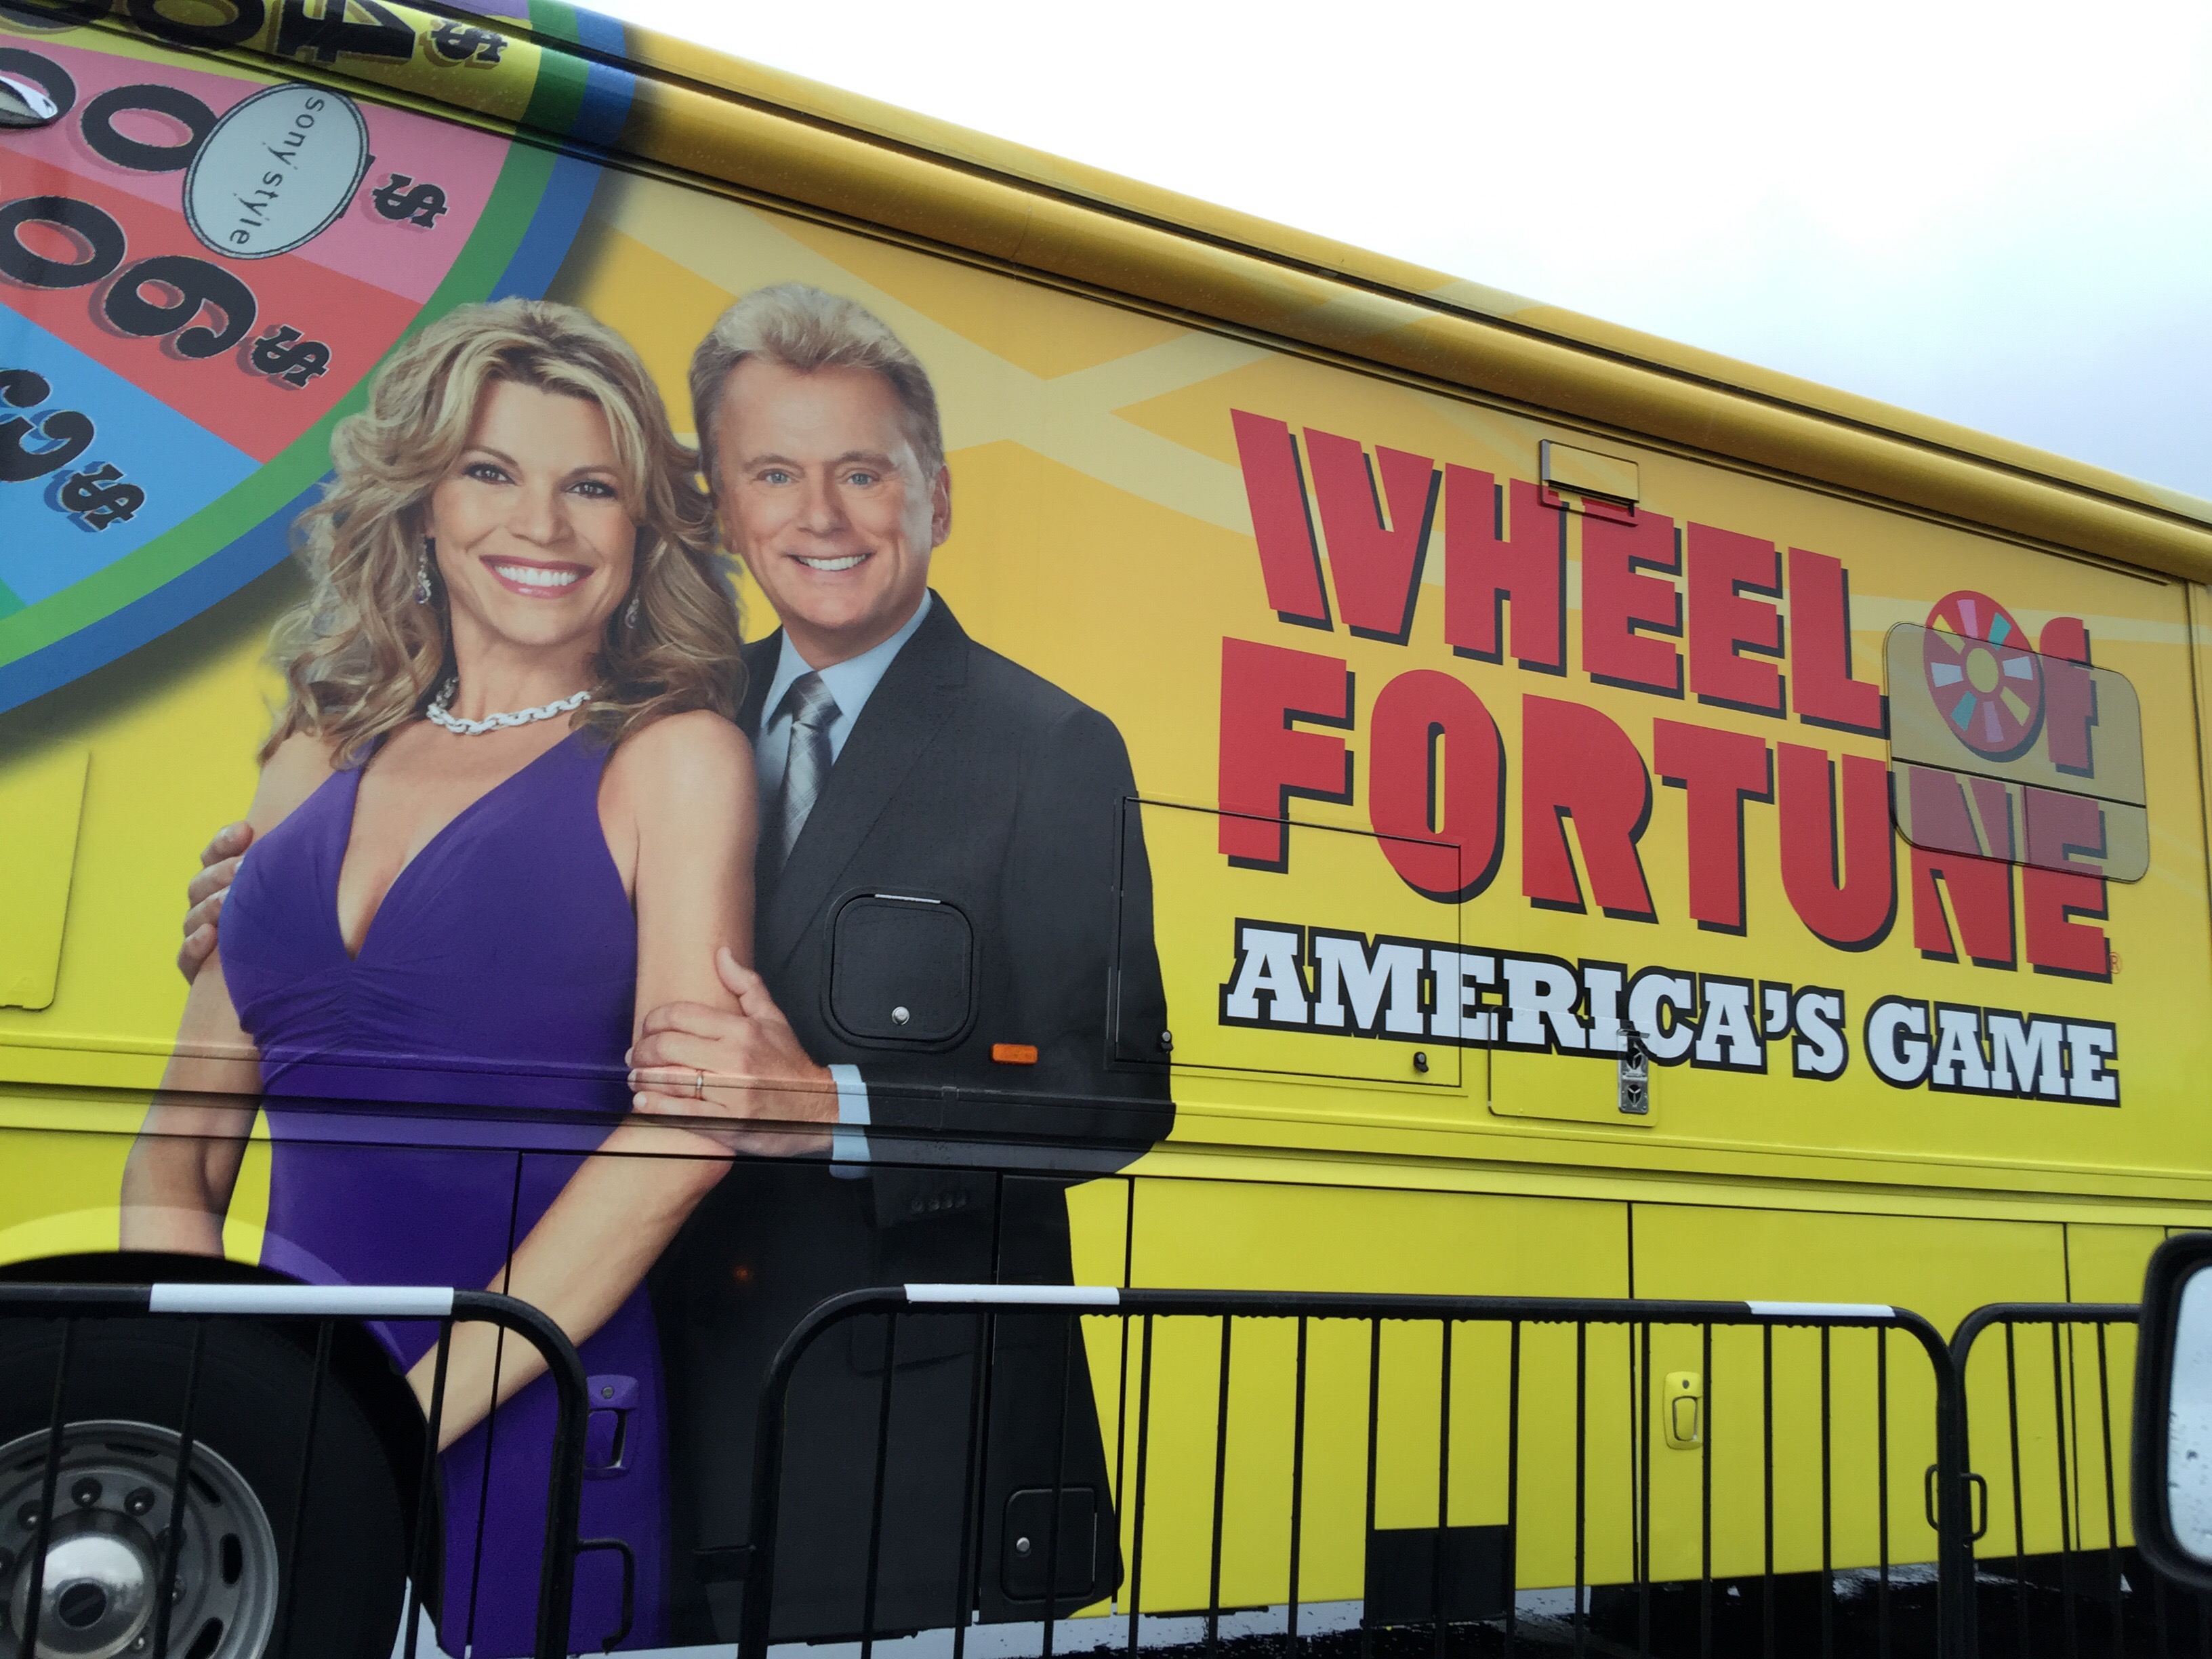 wheel! of! fortune!